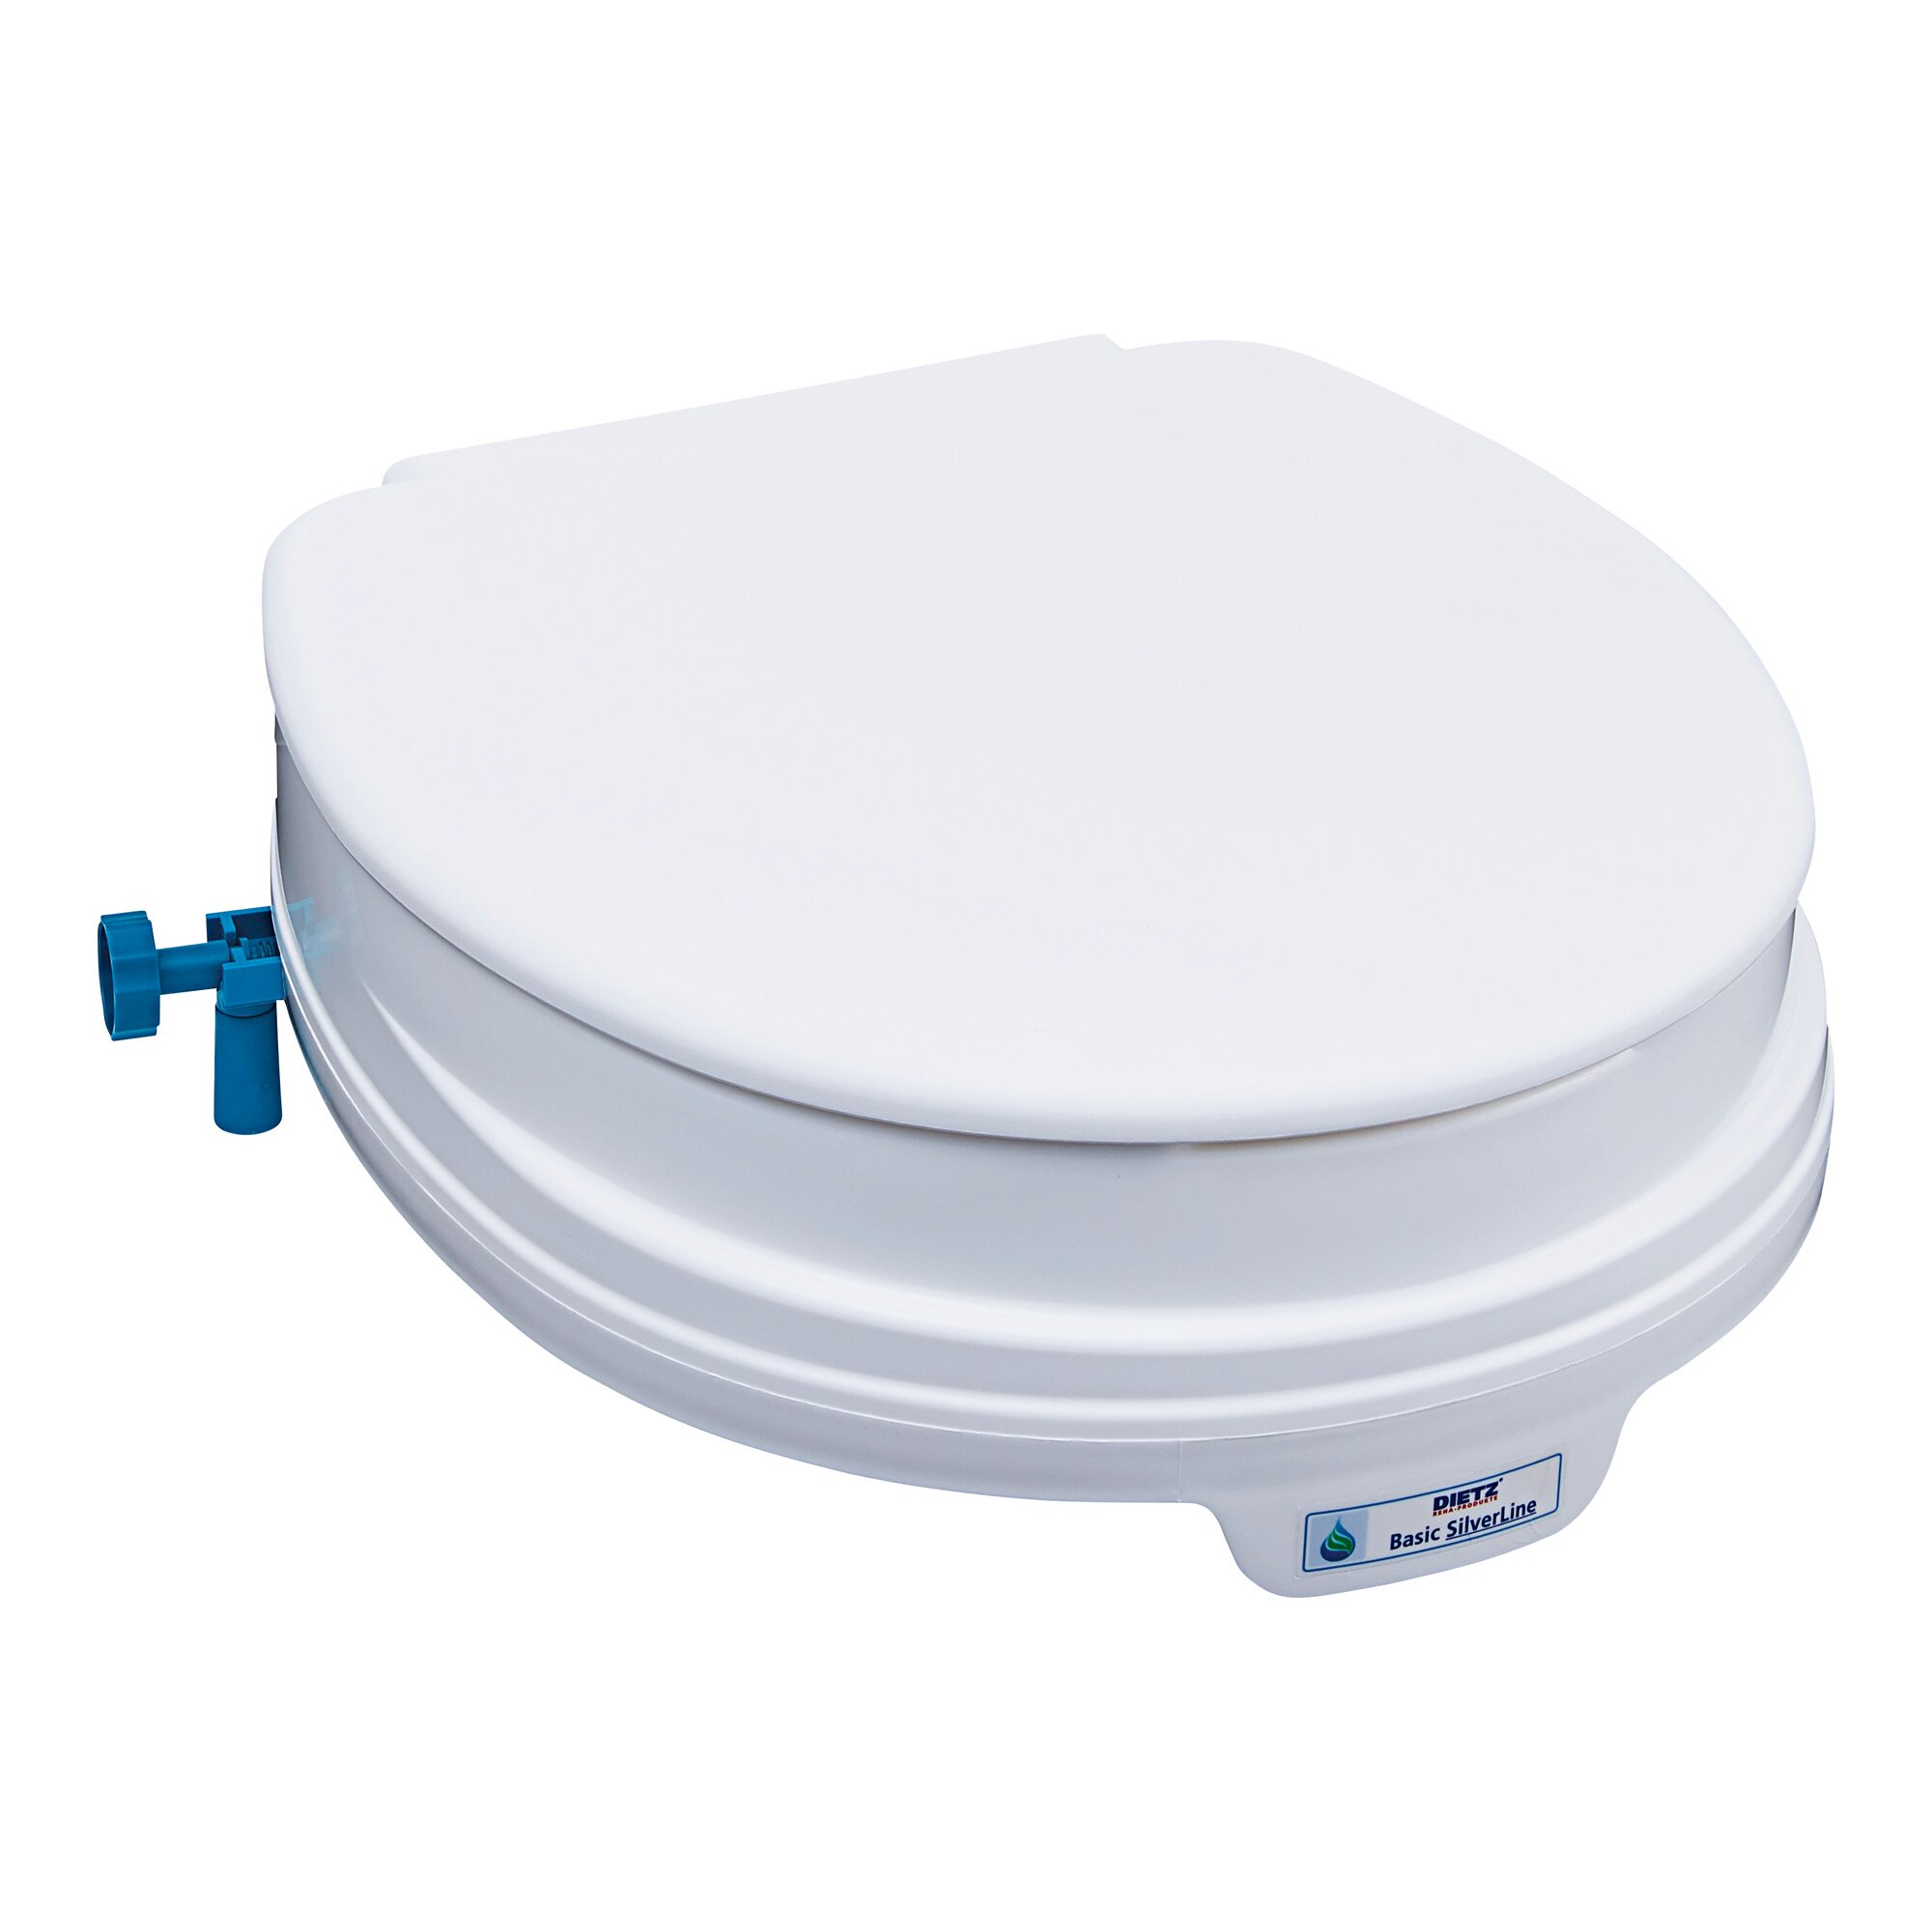 Toilettensitzerhöhung B-protect Antibakteriell Wc-aufsatz 10cm Universal Alle Wc